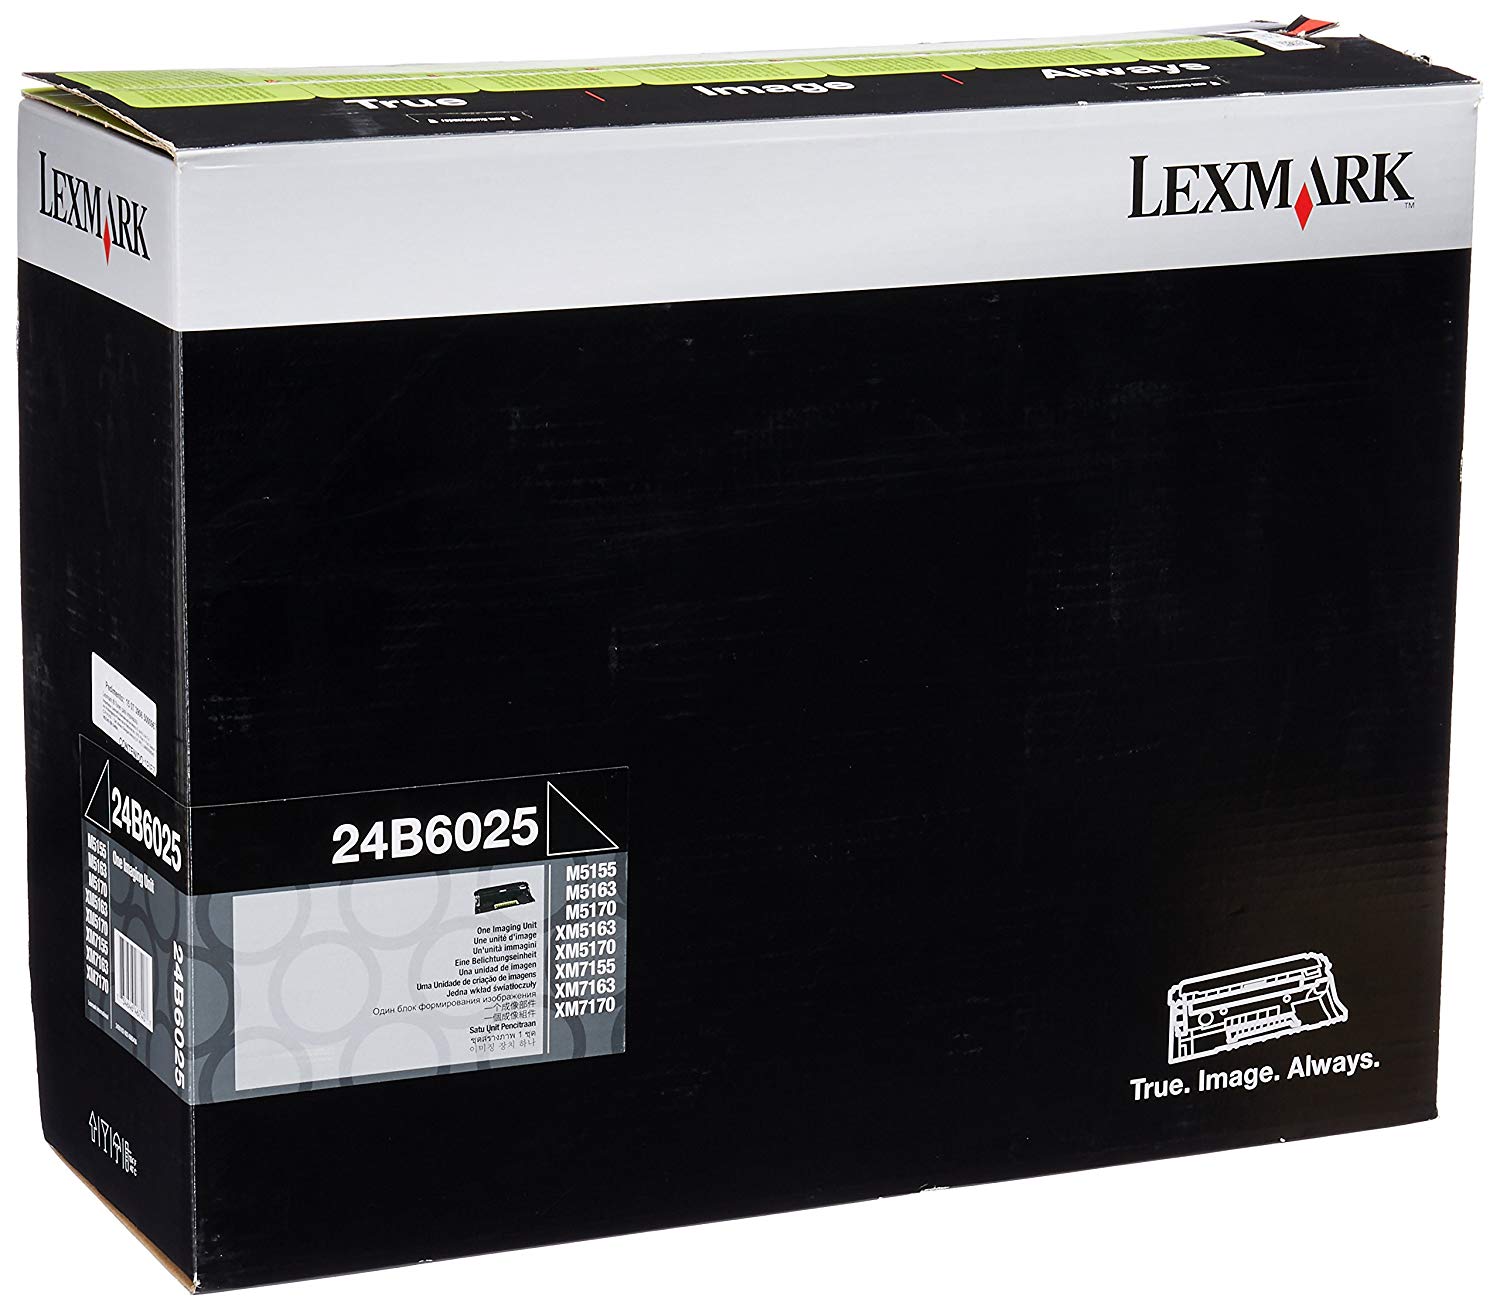 Lexmark Drum Kit Black Pages 100.000